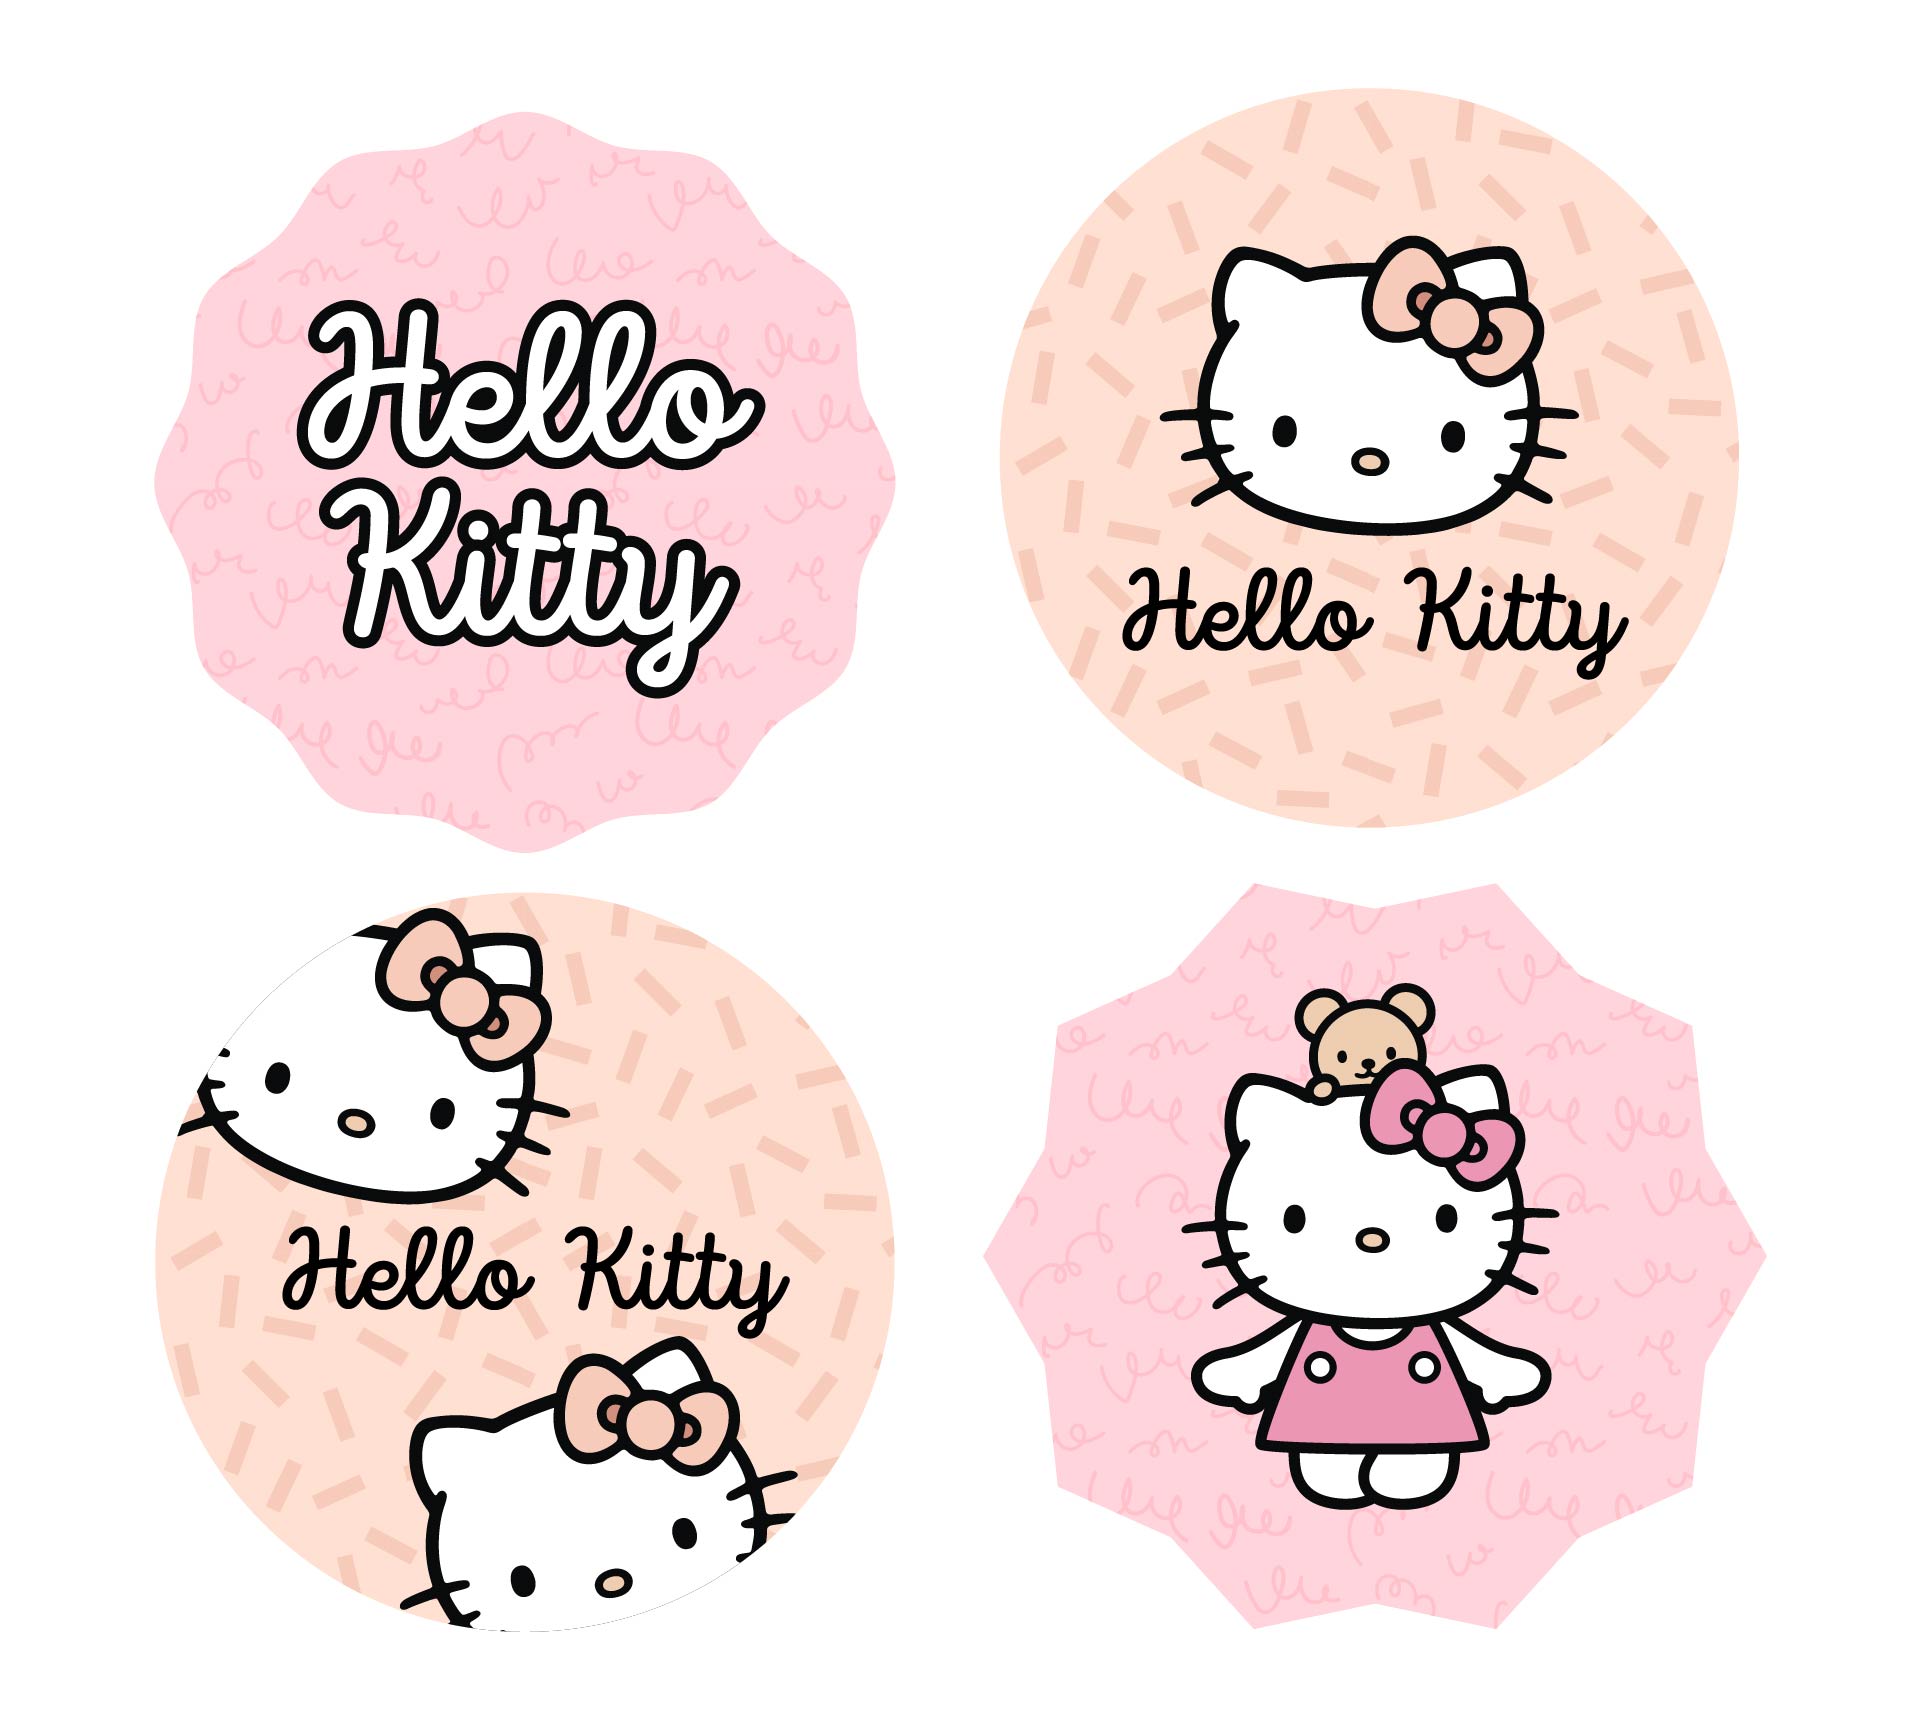 Printable Hello Kitty Cupcake Toppers